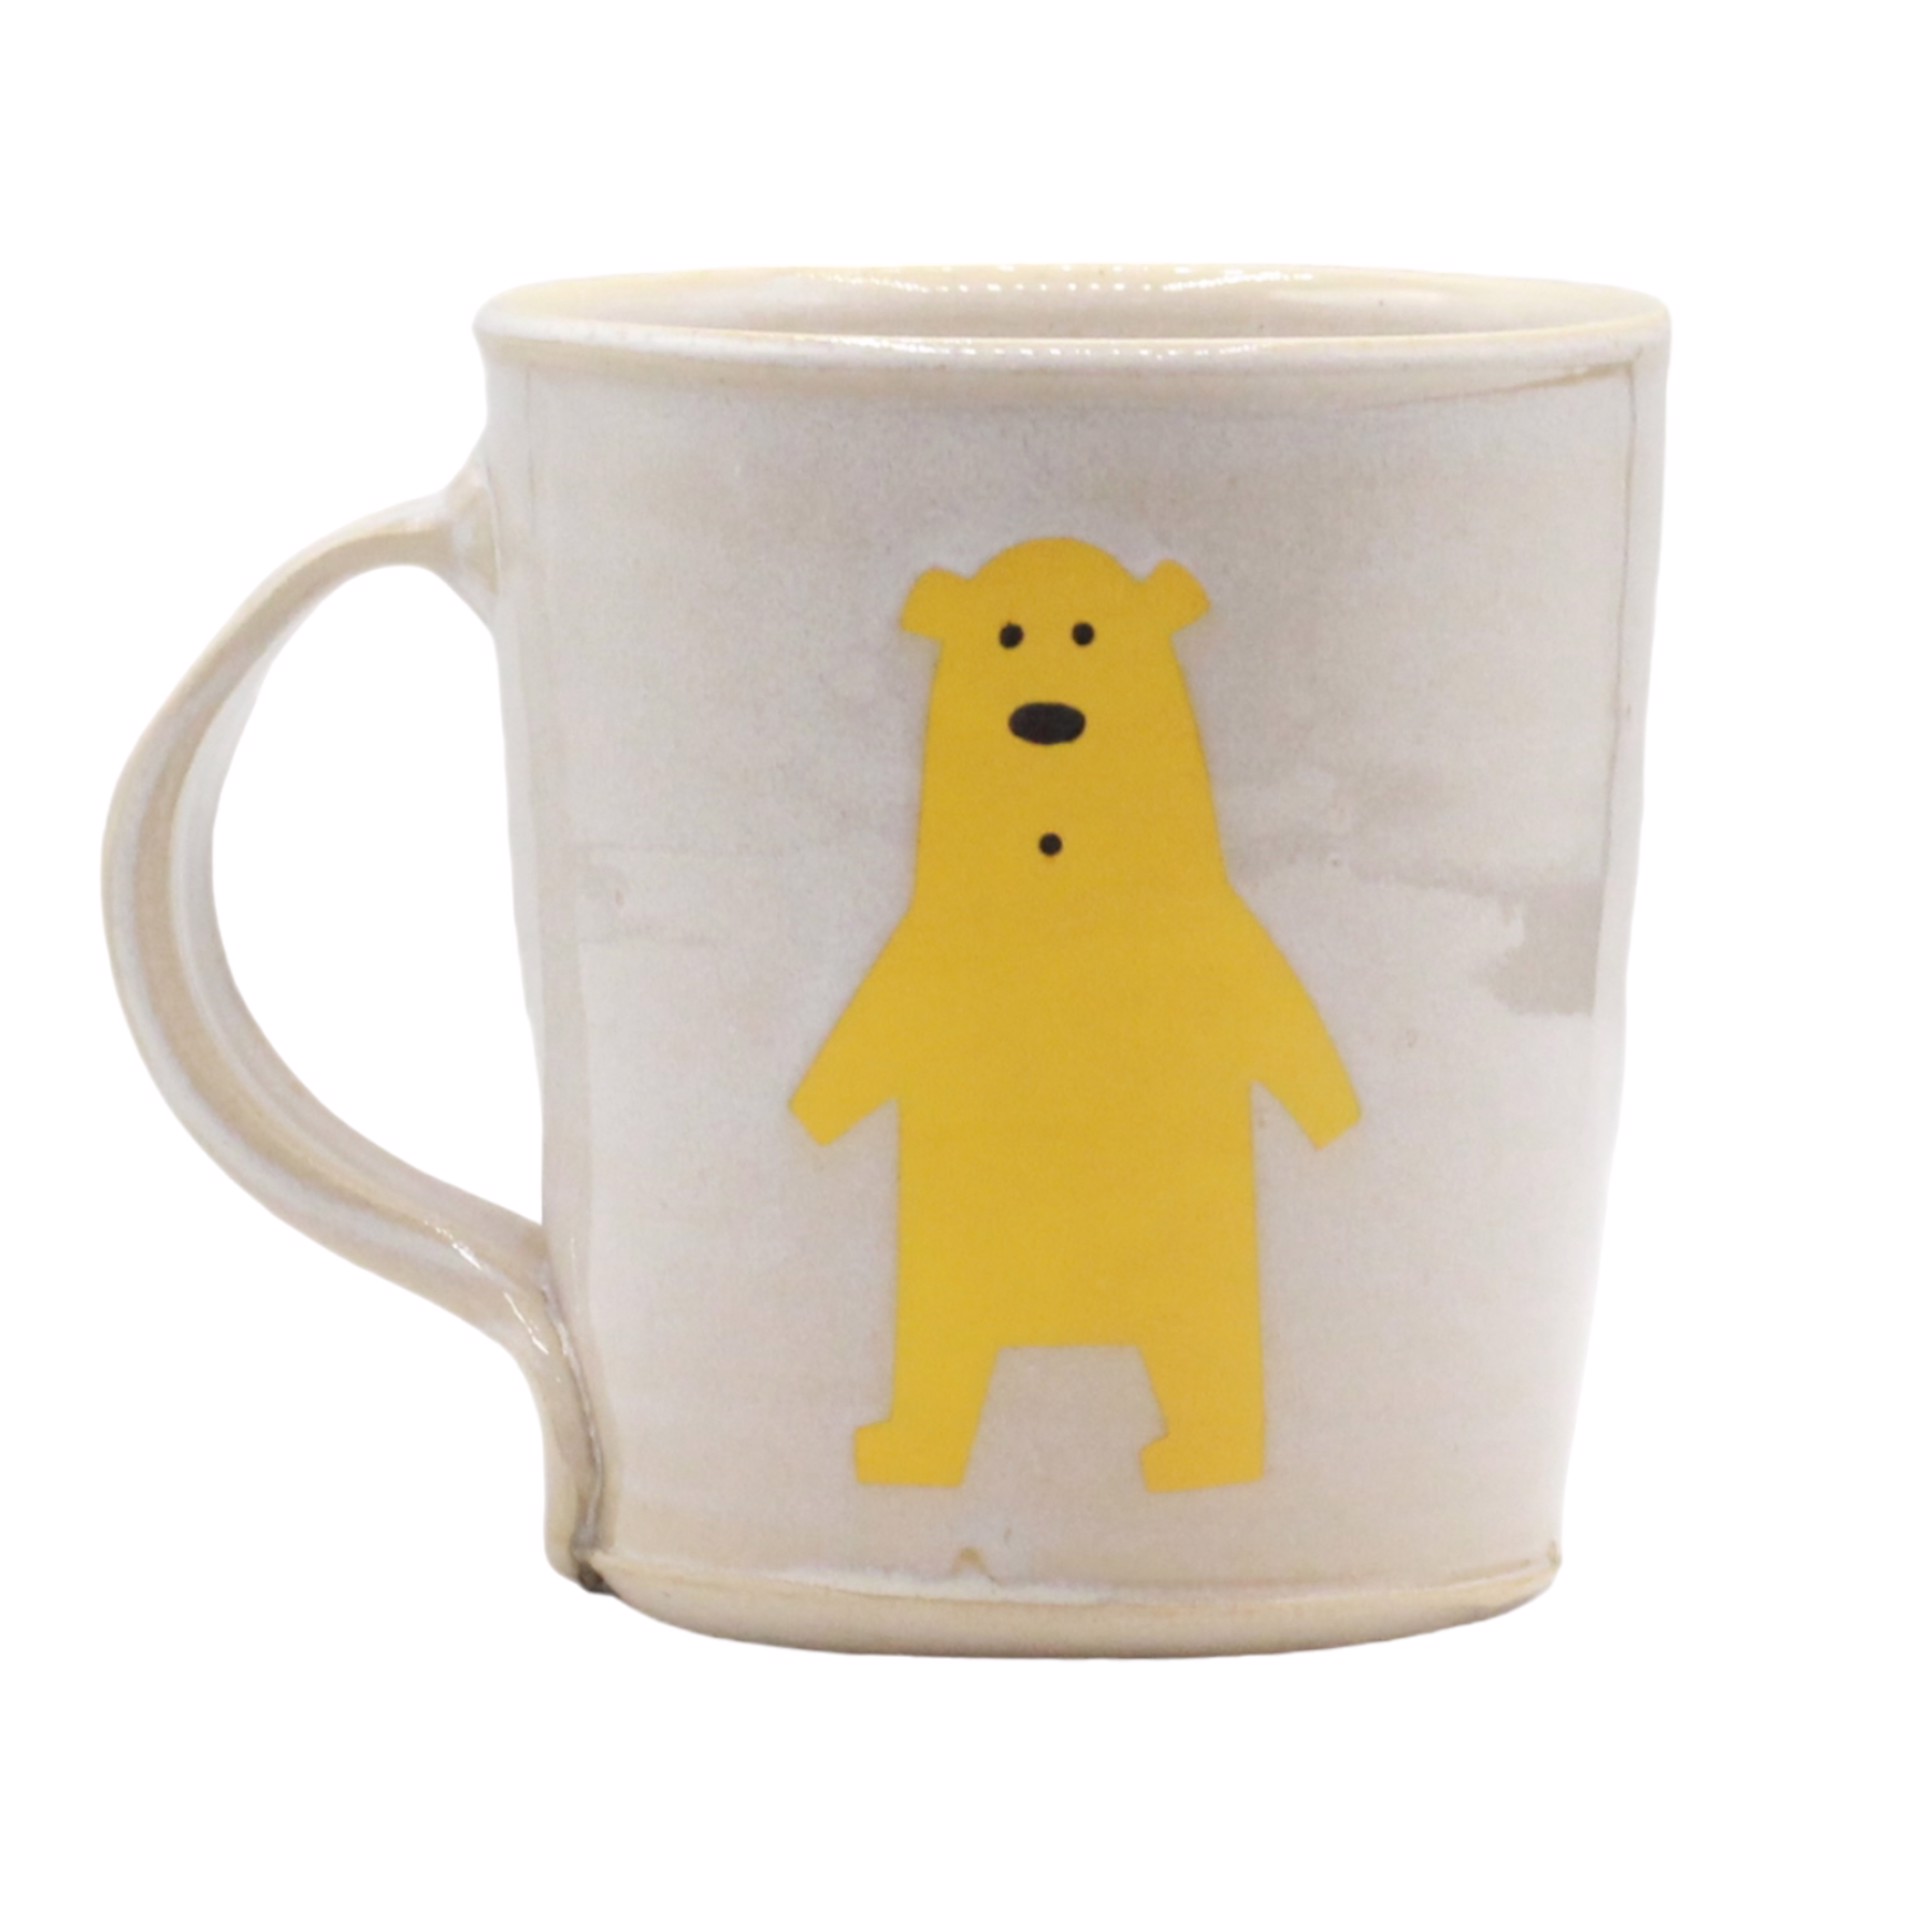 Barnaby the Bear Mug by Stephen Mullins